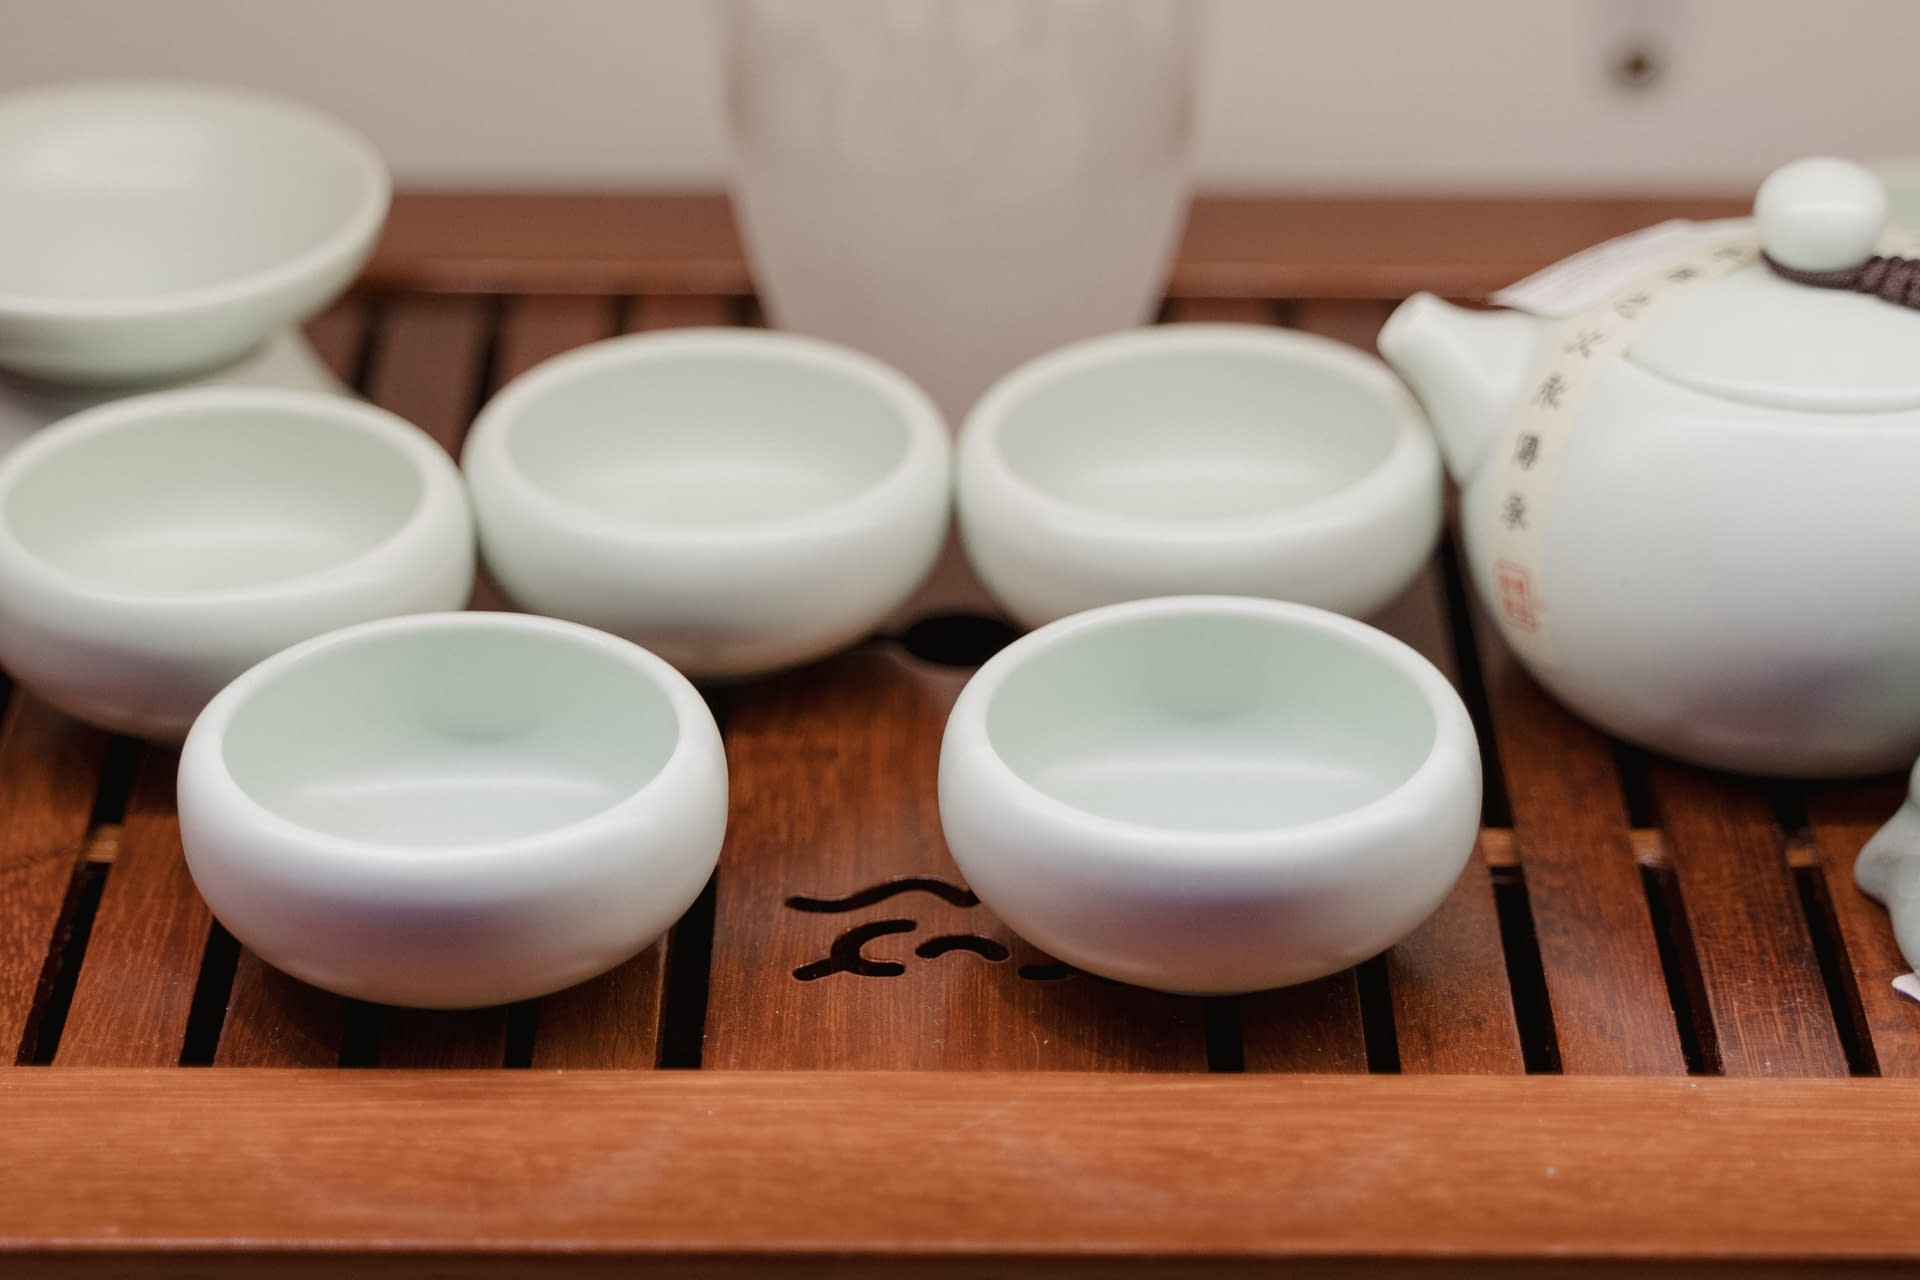 tea ceremony utensils on a tray